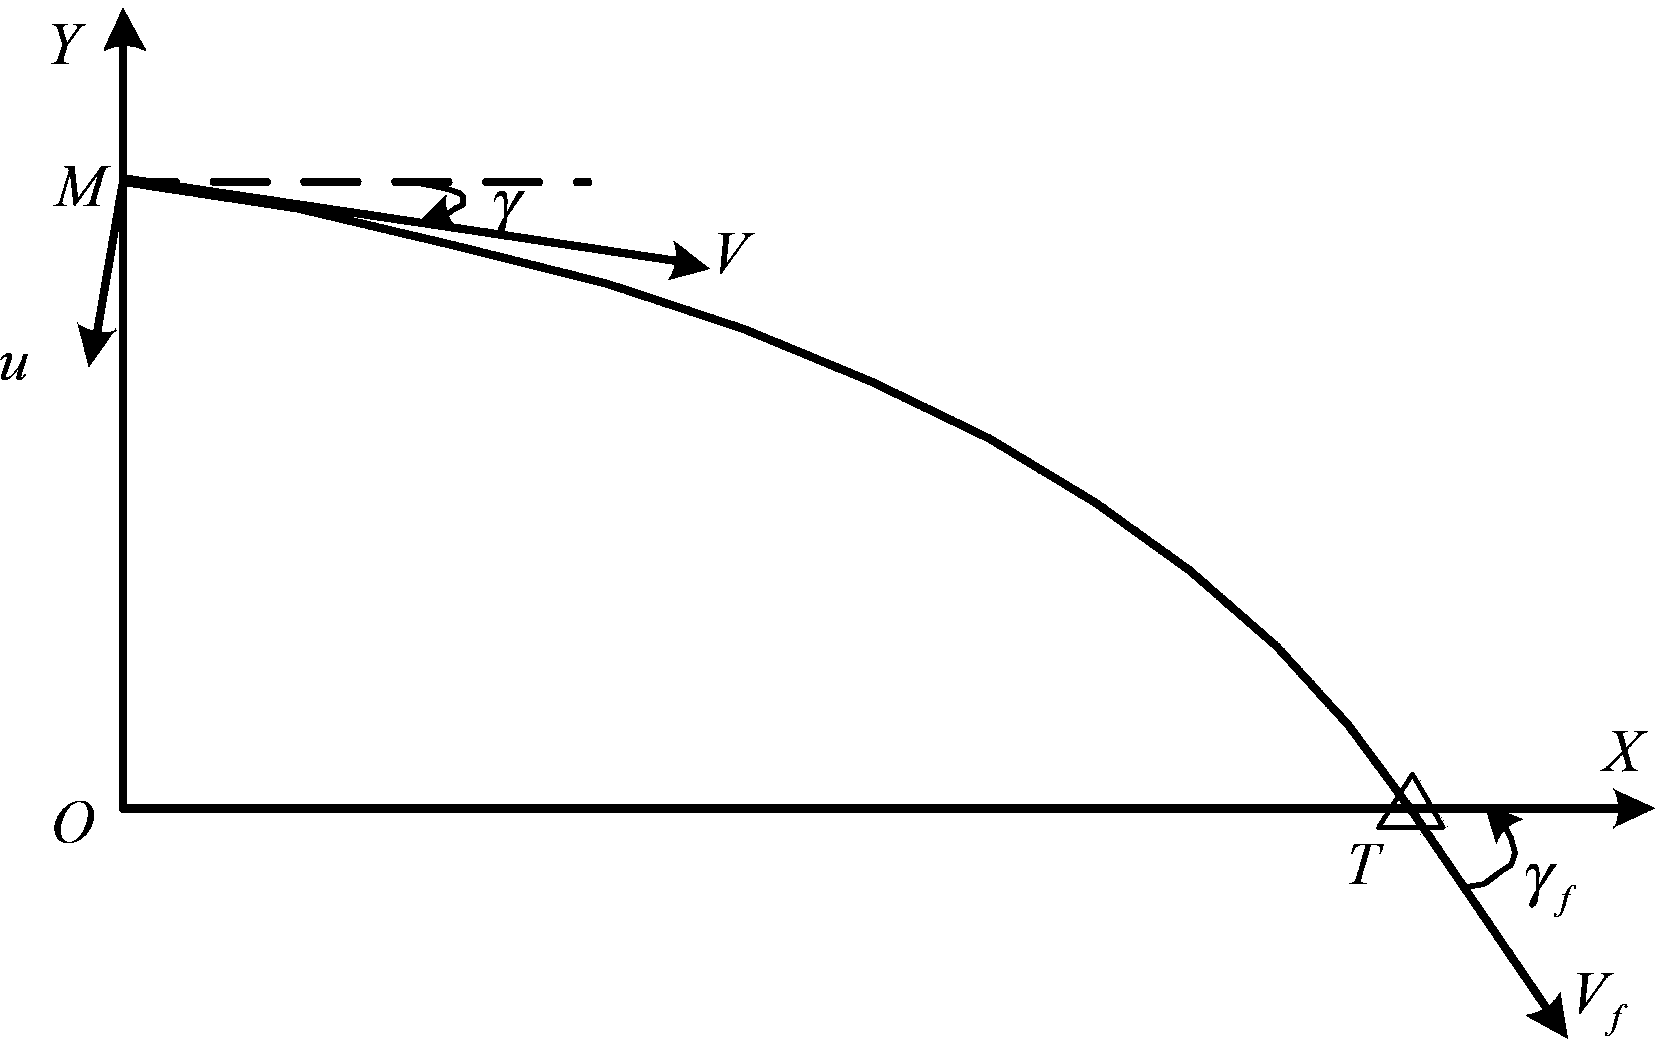 Suboptimal guidance method with terminal angle constraint